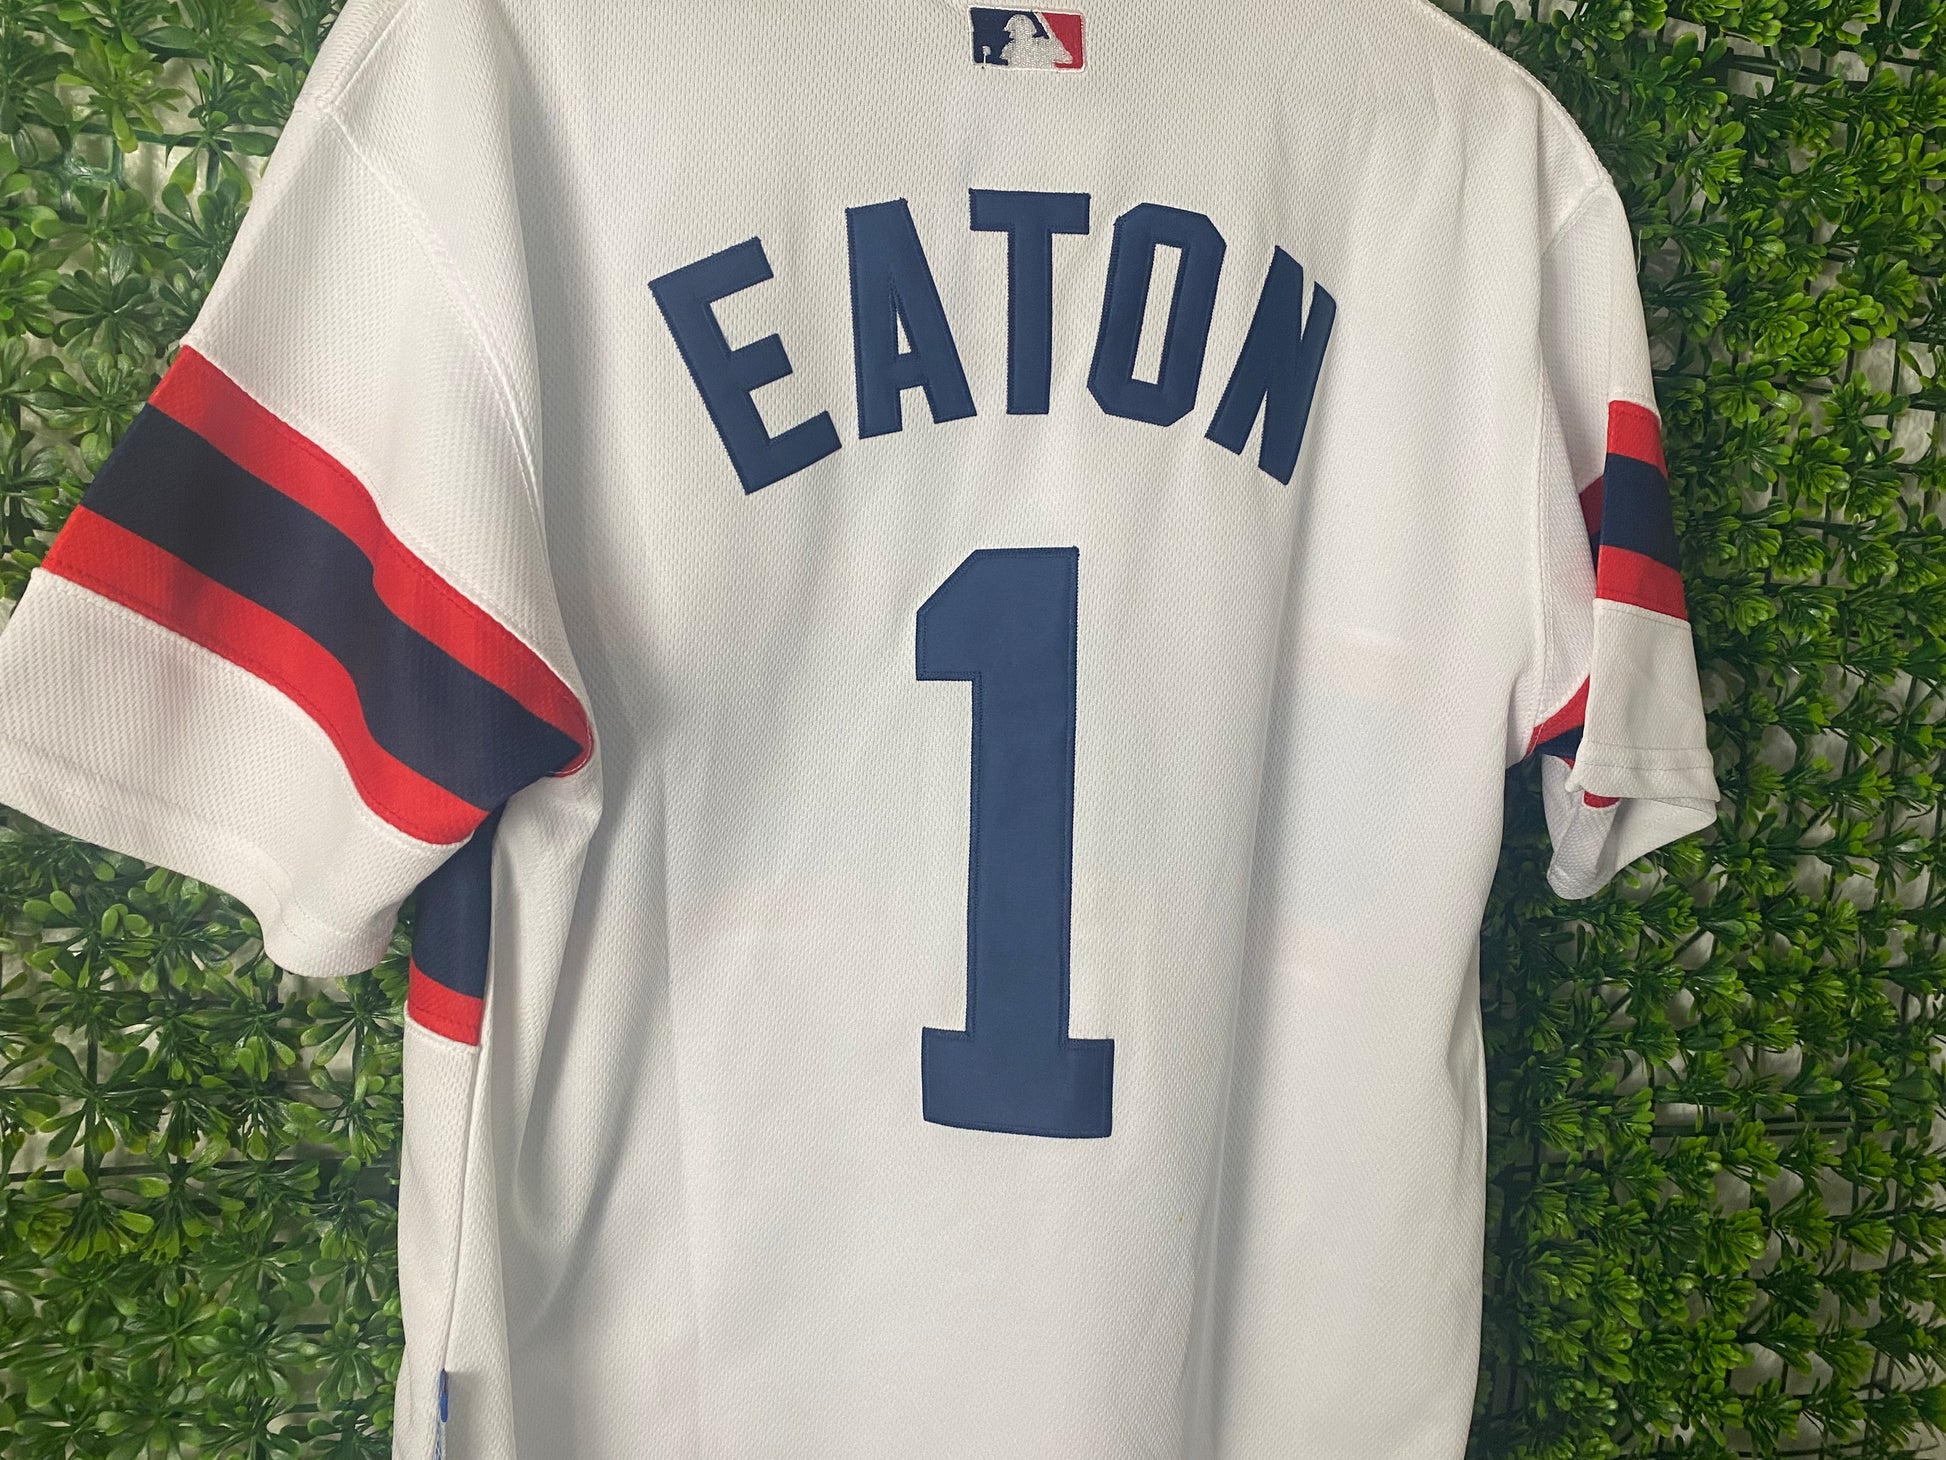 MLB White Sox Eaton #1 V-Neck Jersey – thriftyrebels